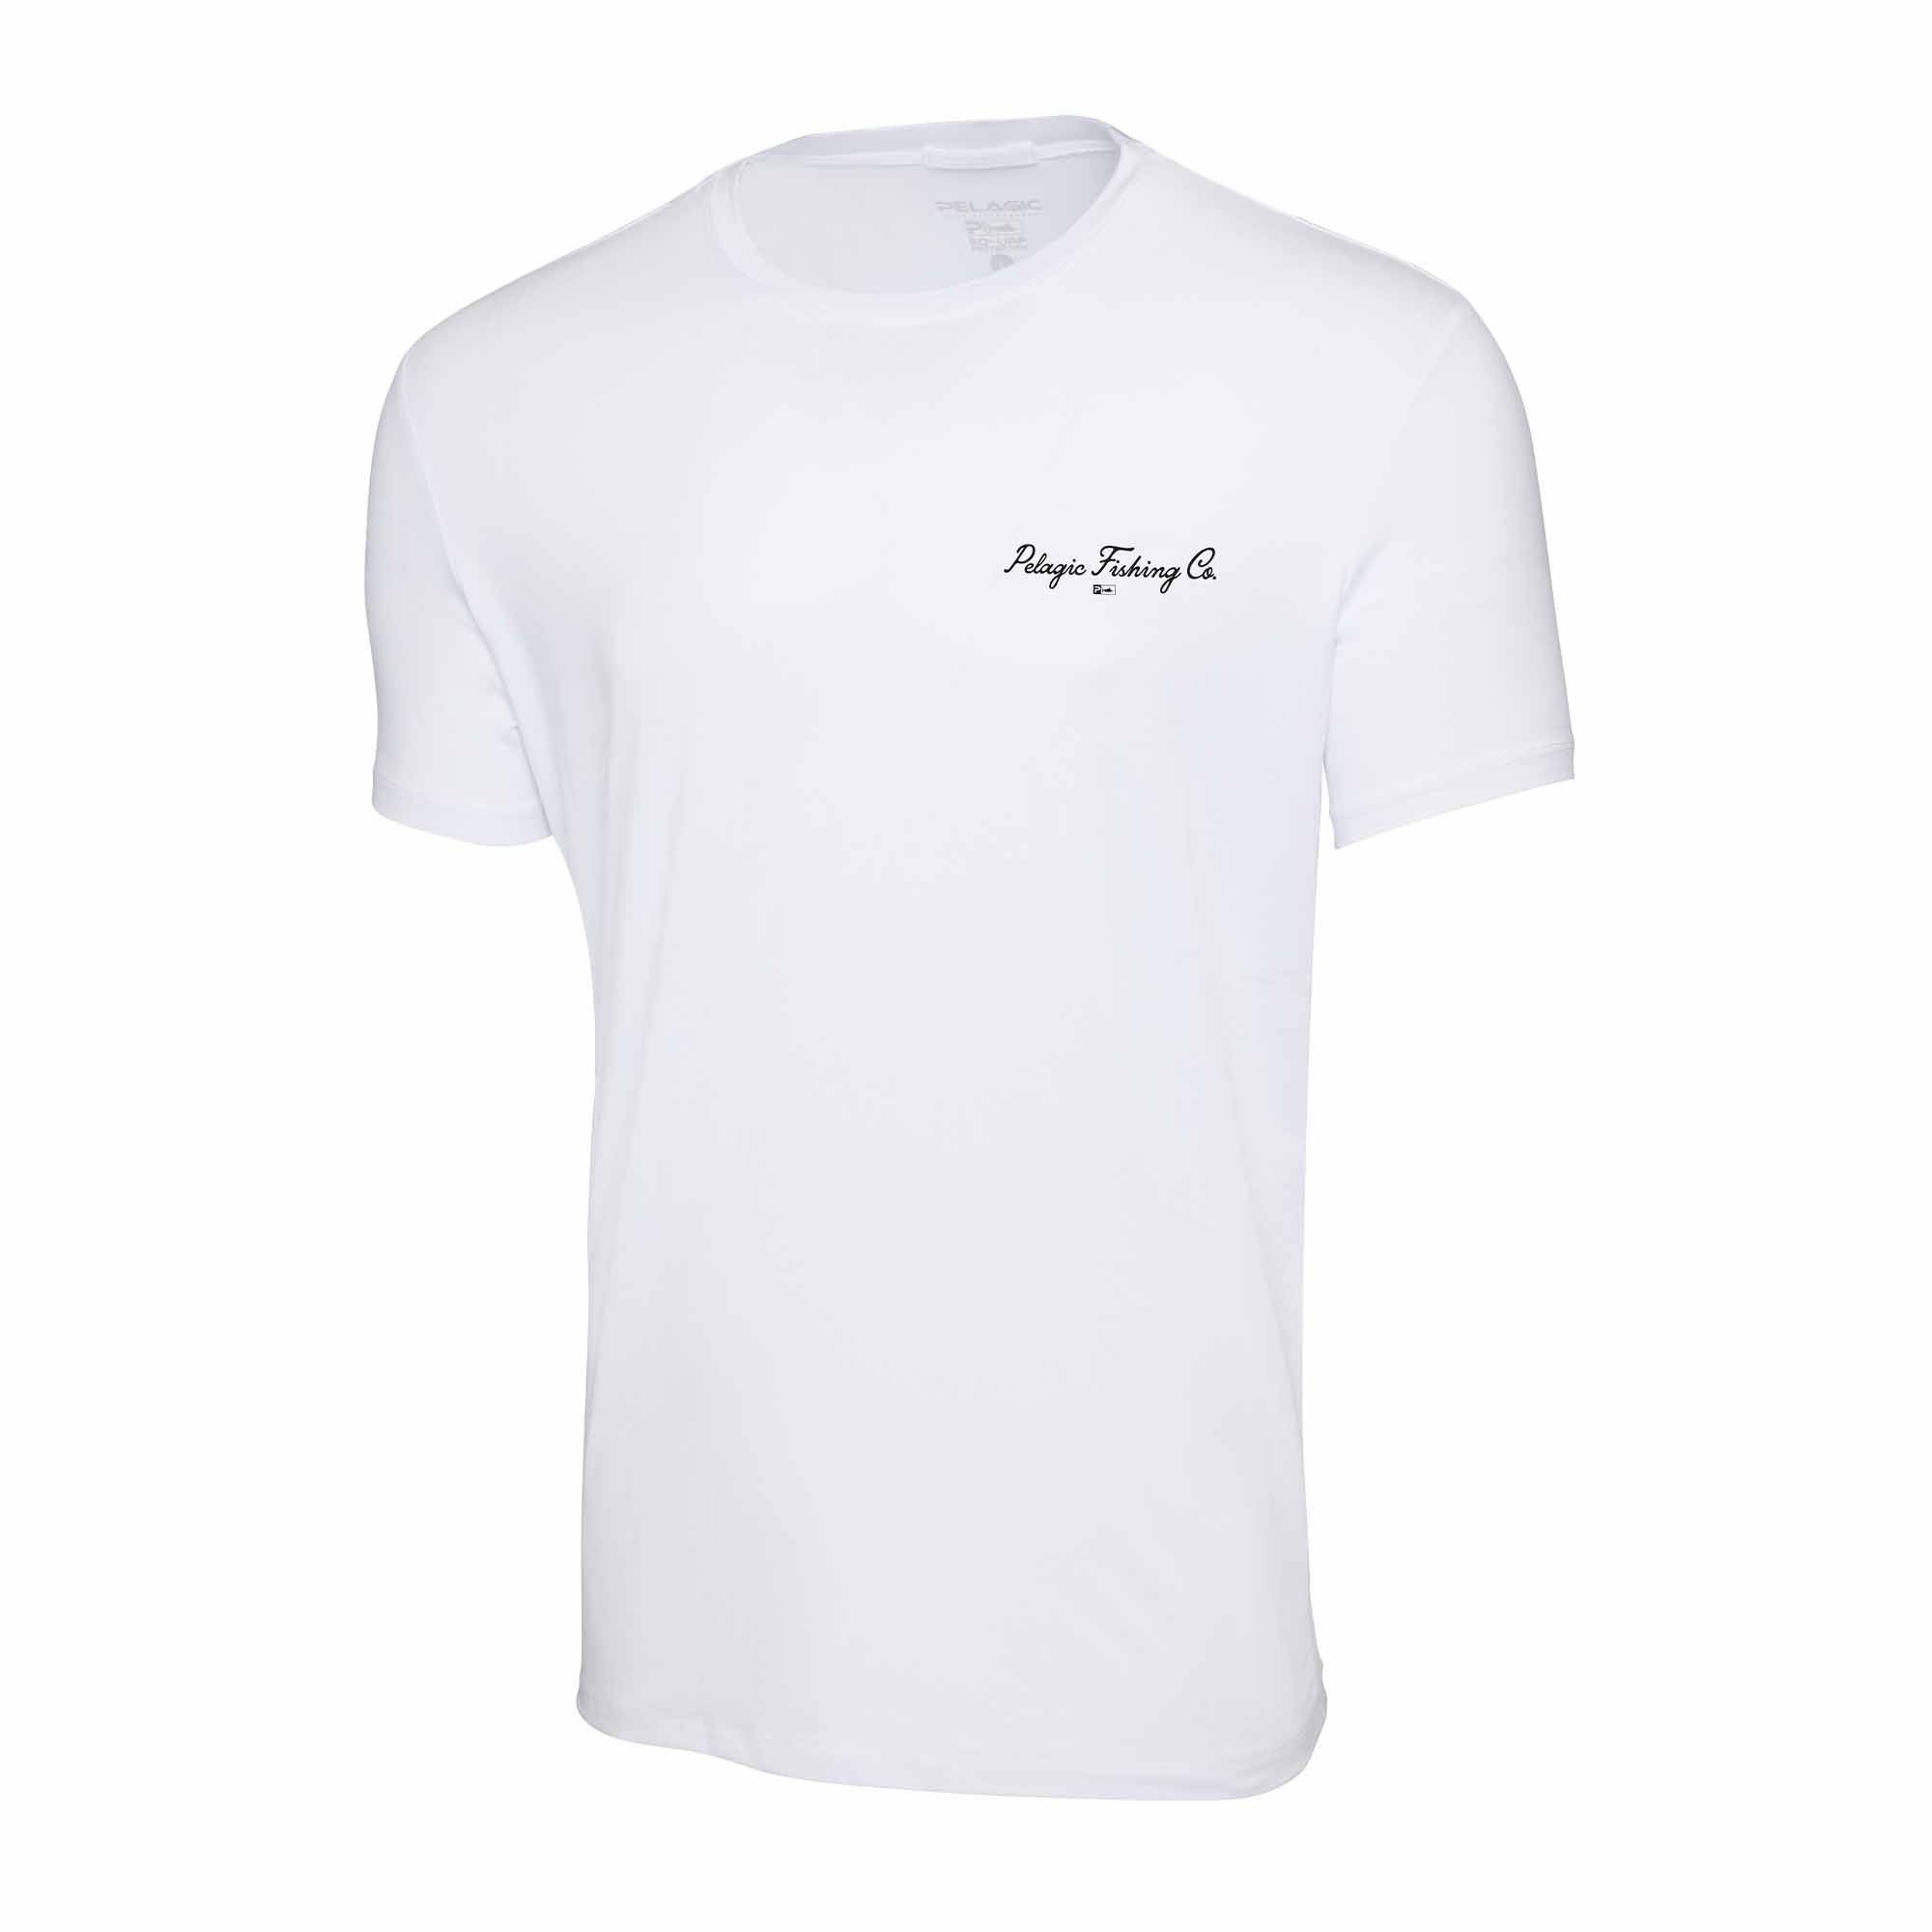 Pelagic Stratos Goione YFT Performance Shirt - White - Medium